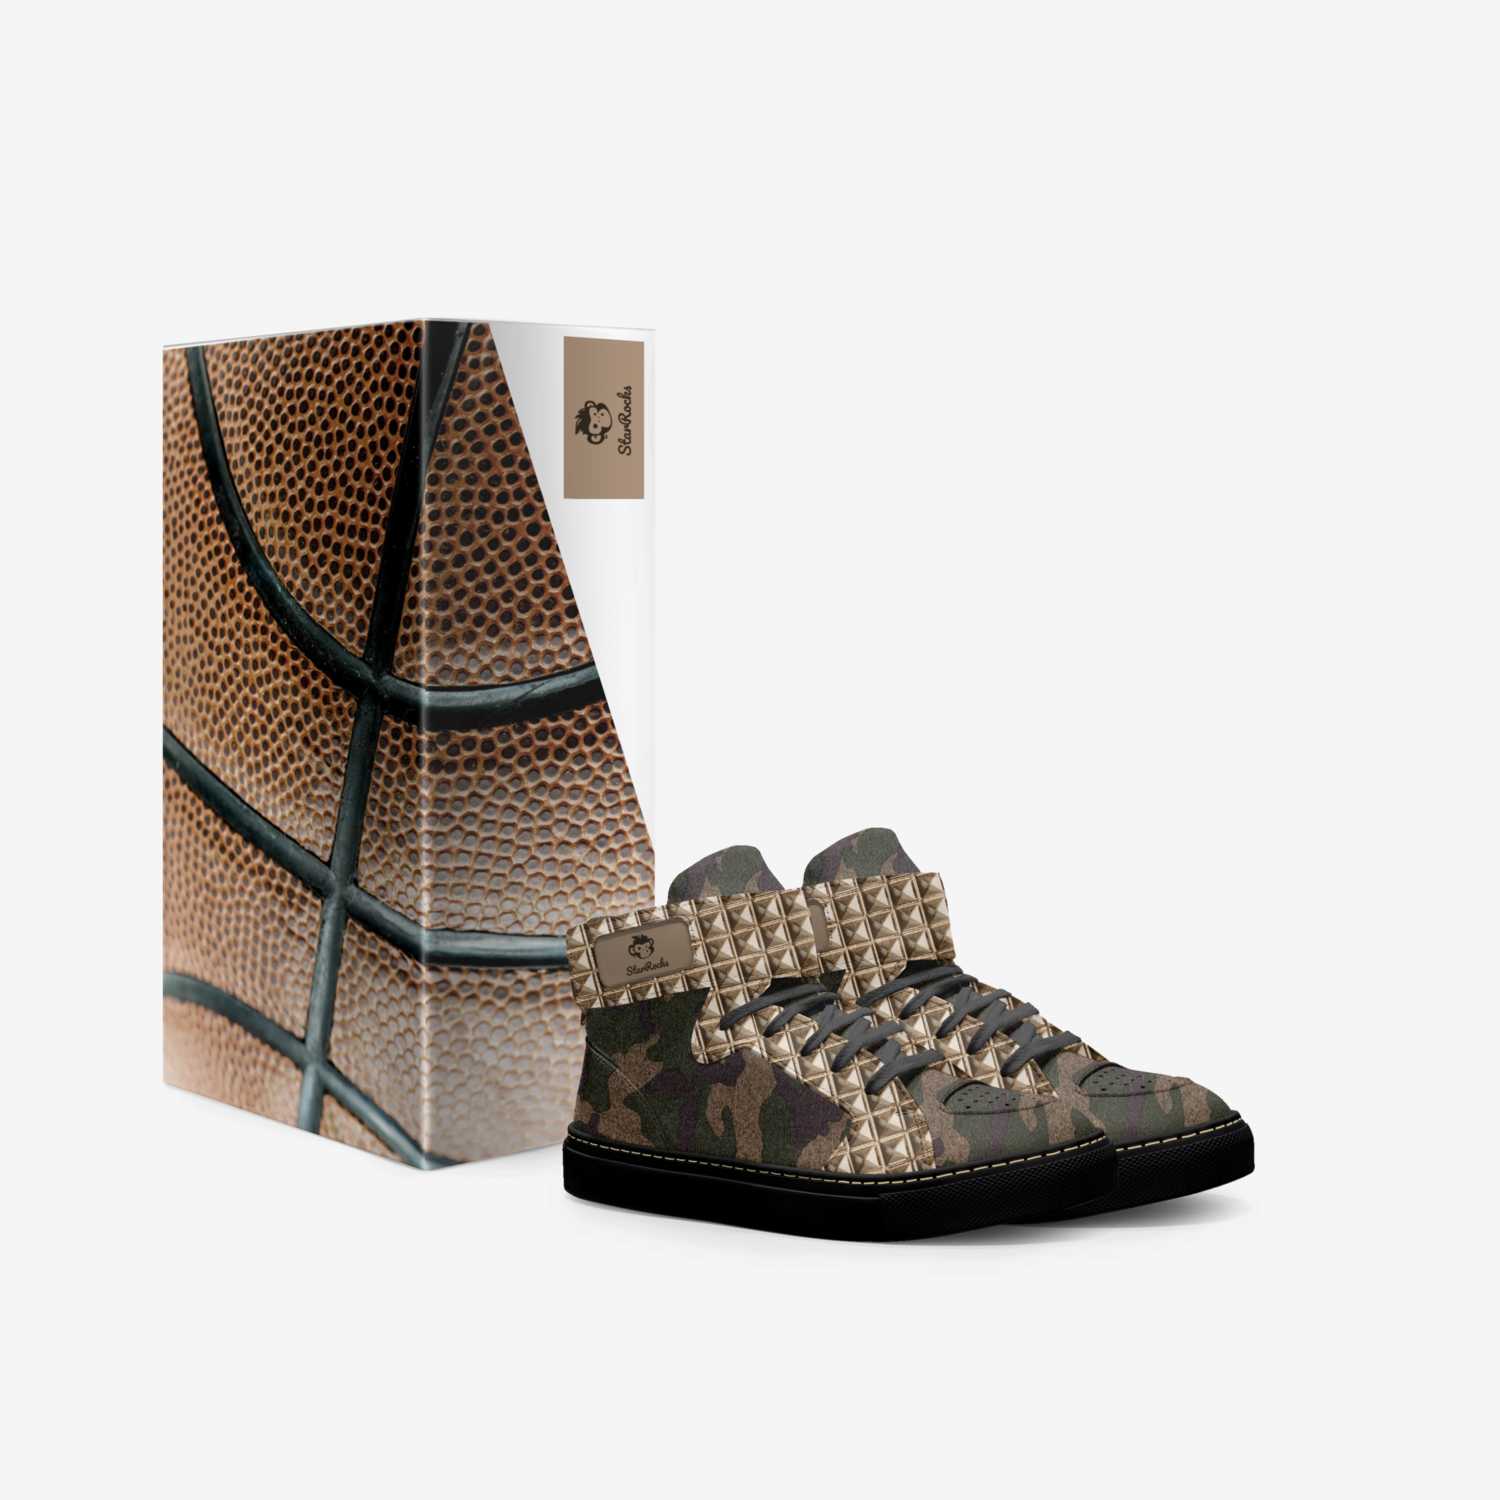 StarRocks custom made in Italy shoes by Lamario Star | Box view